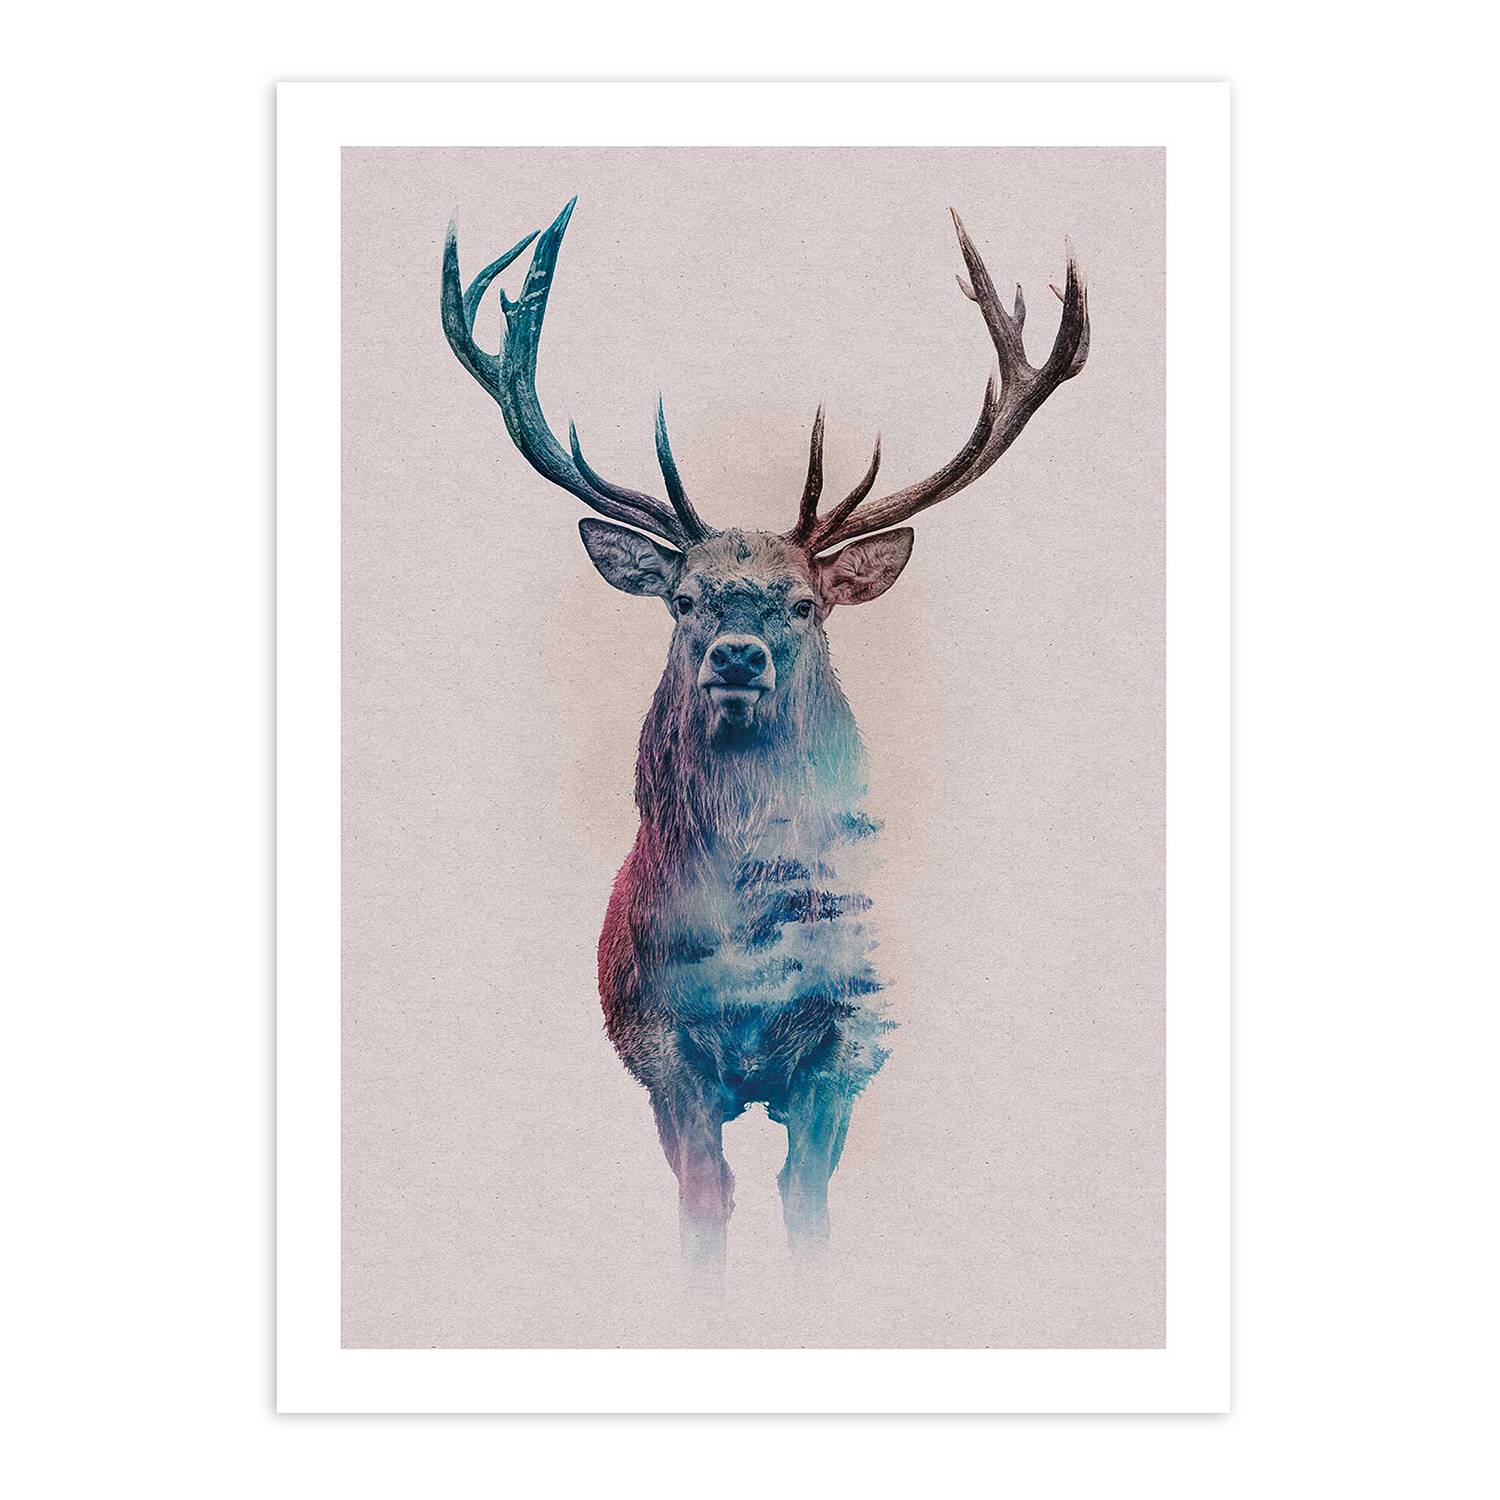 Wandbild Animals Forest Deer kaufen home24 